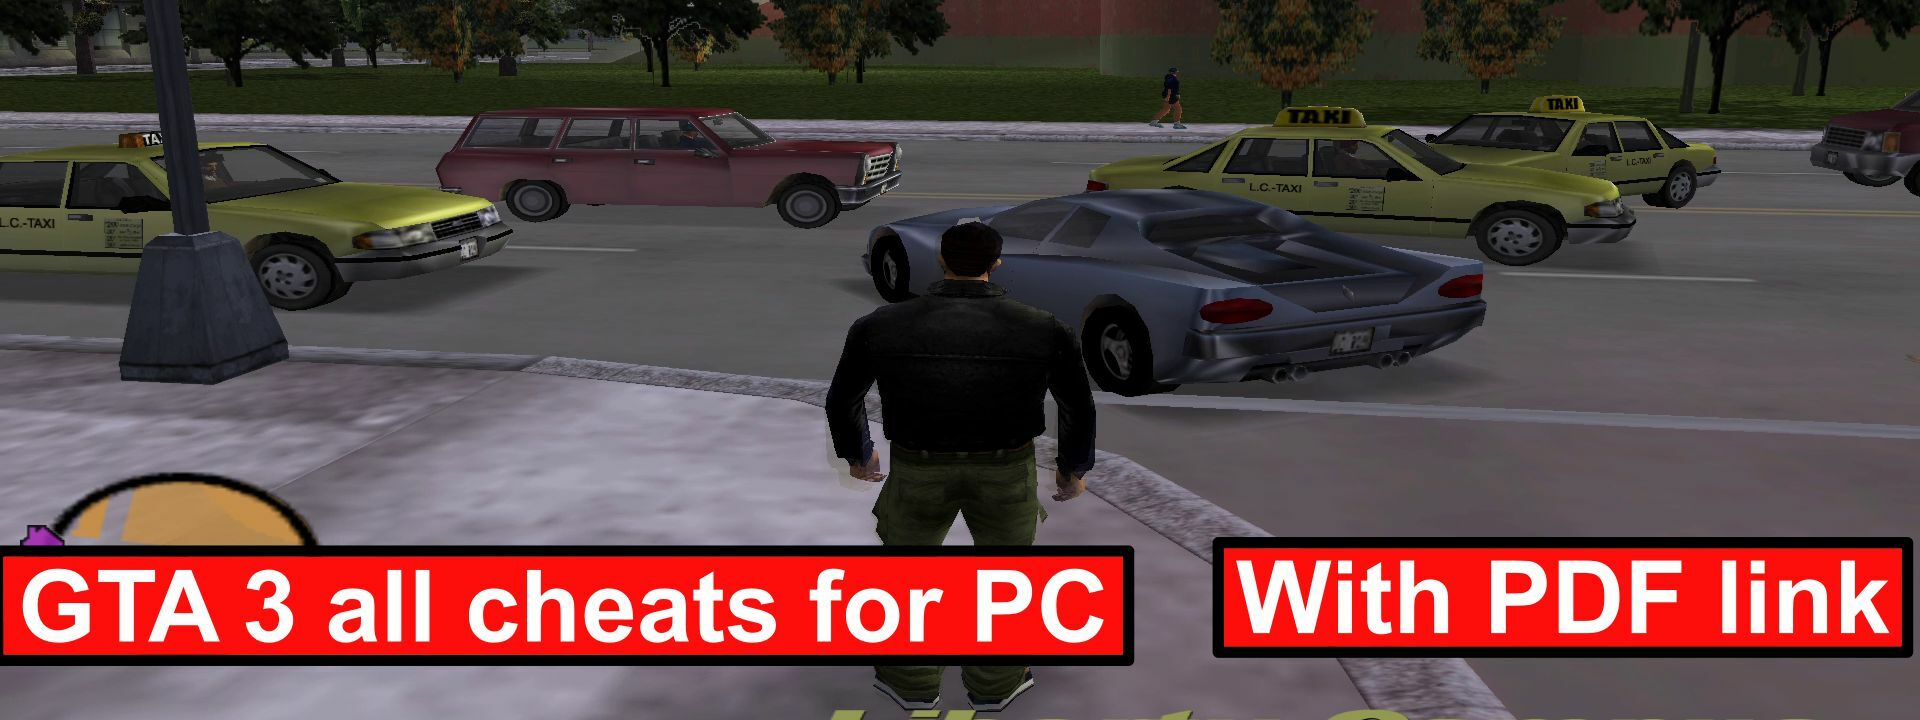 GTA 3 cheats for PC